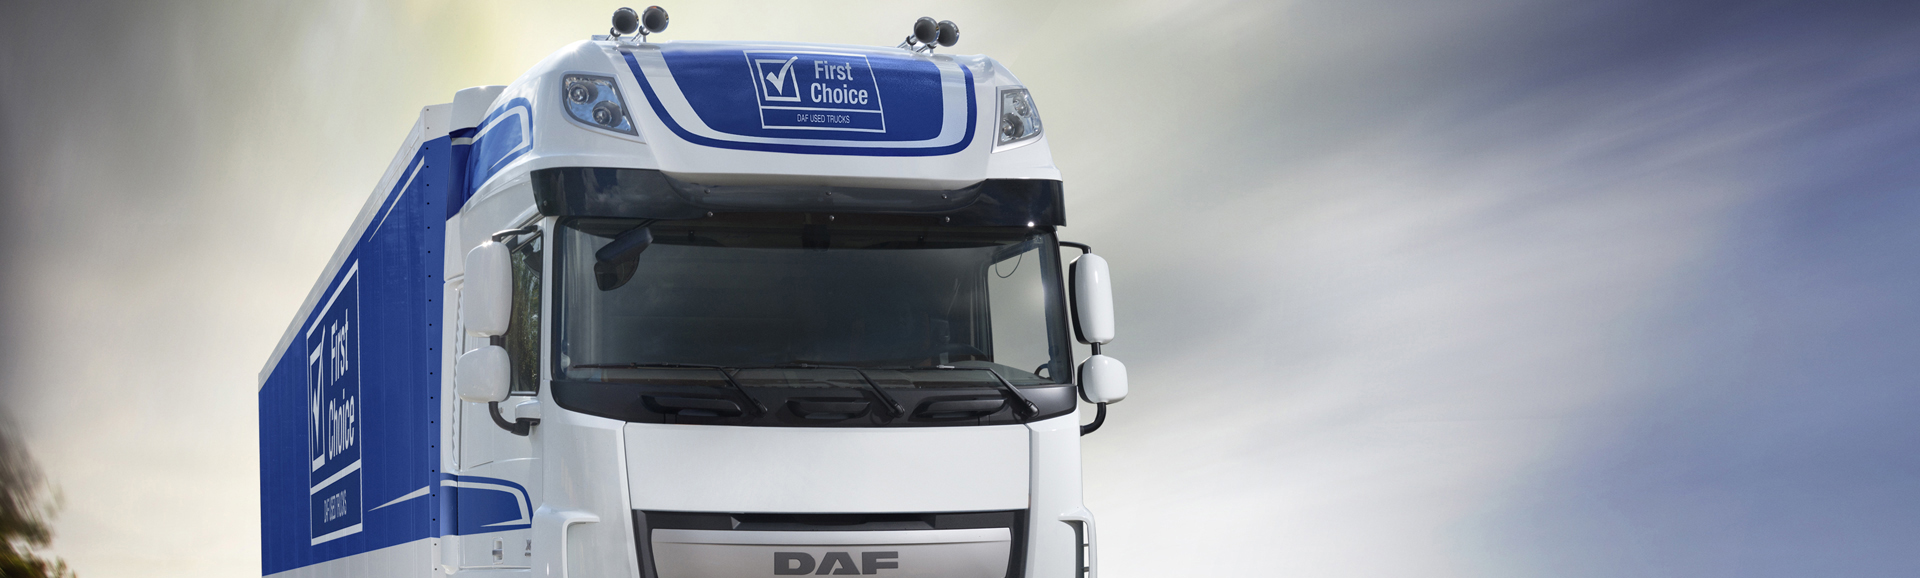 DAF-Used-Trucks-First-Choice_2016271-HR-teaser